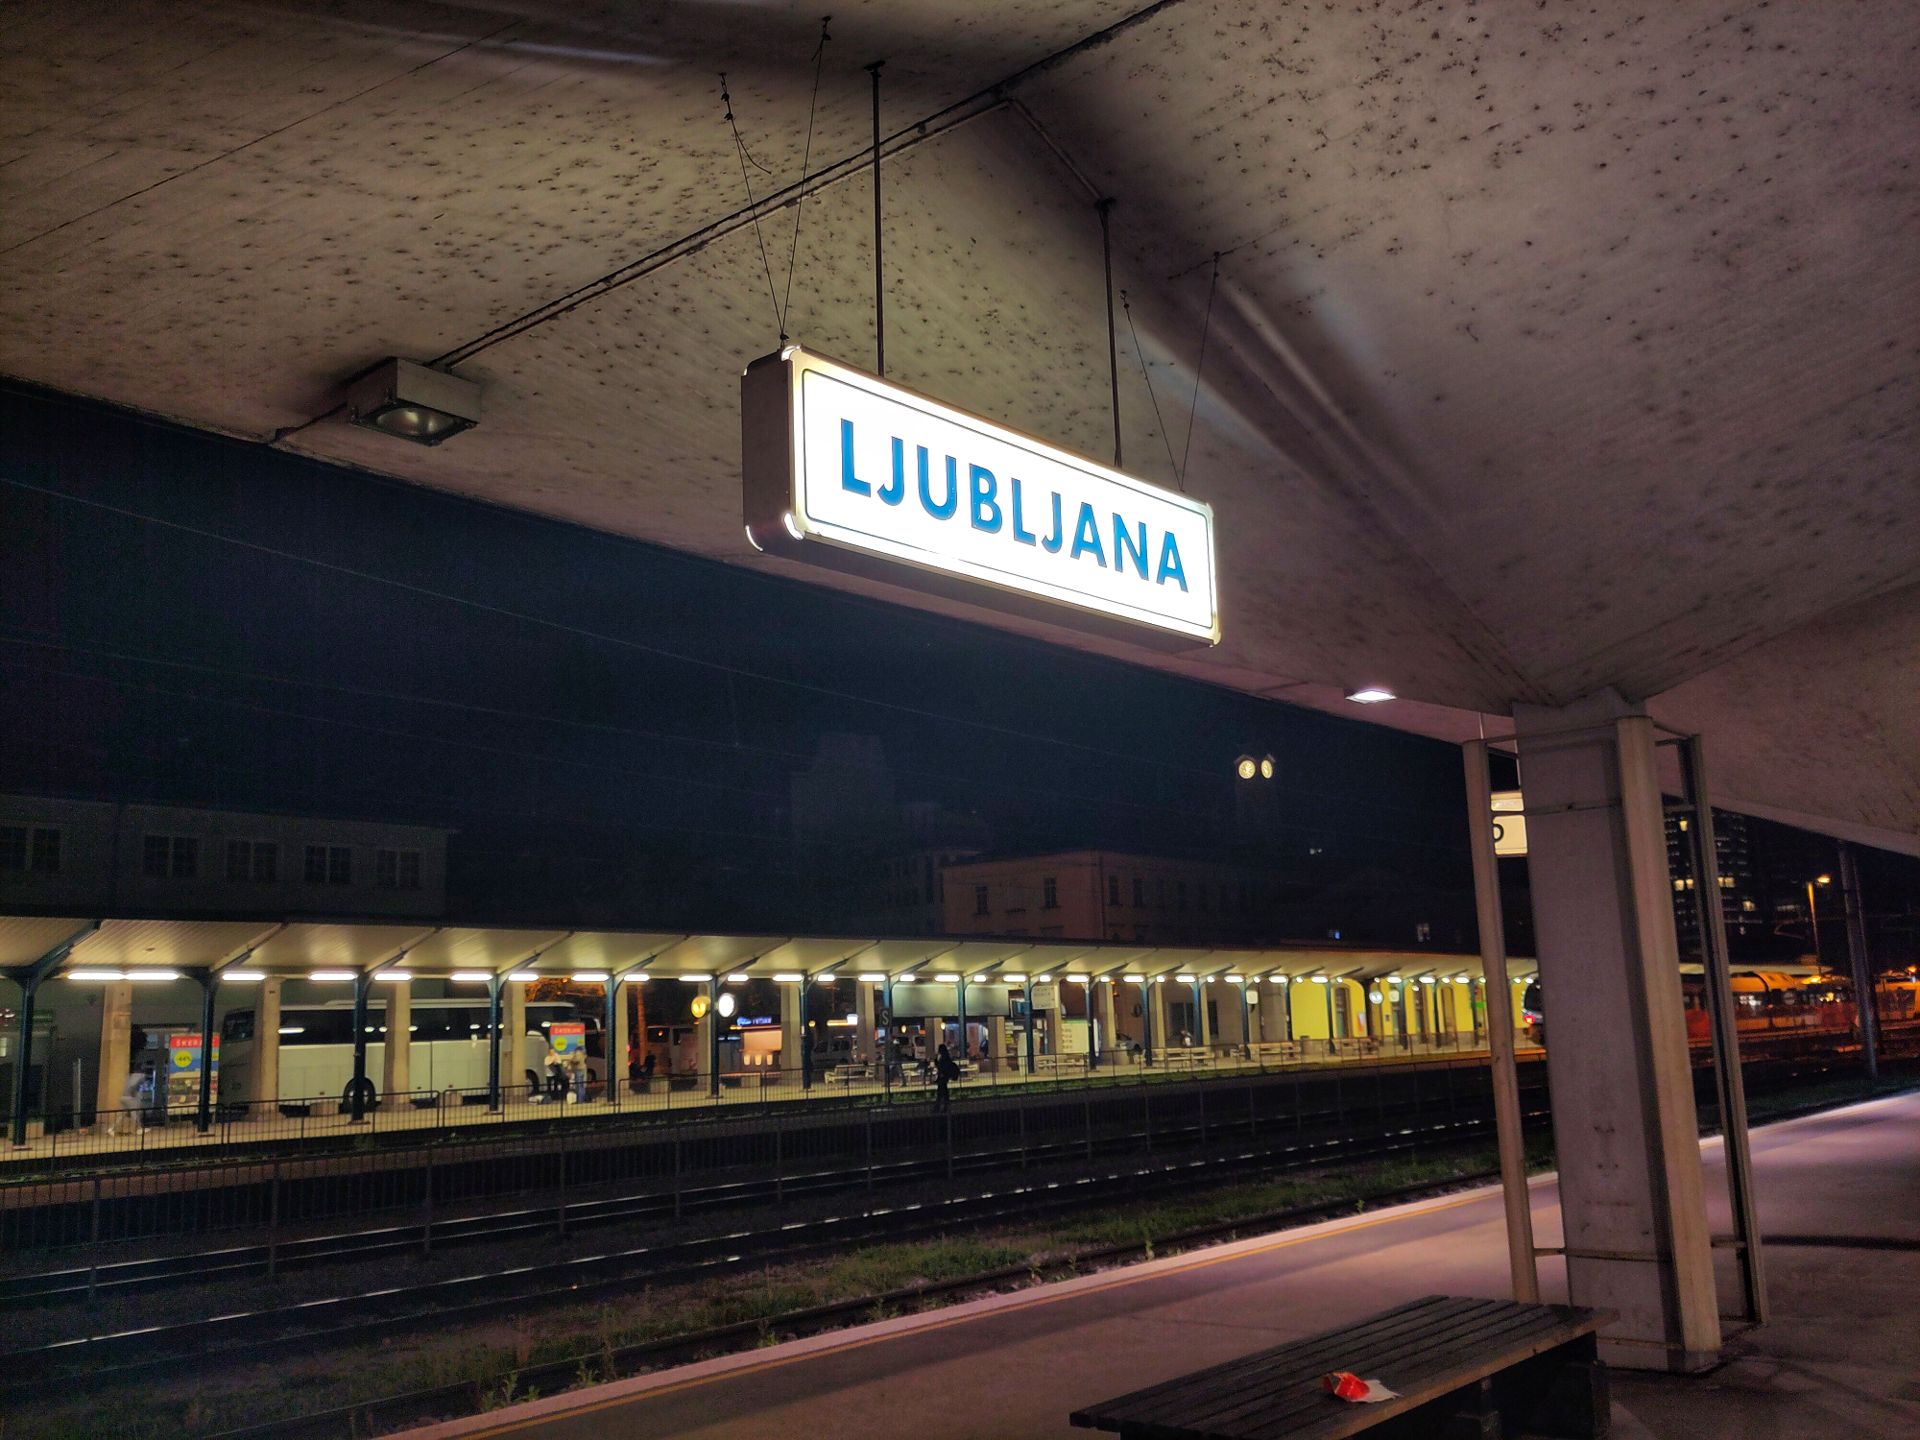 By night, the Ljubljana train station sign on a quay.